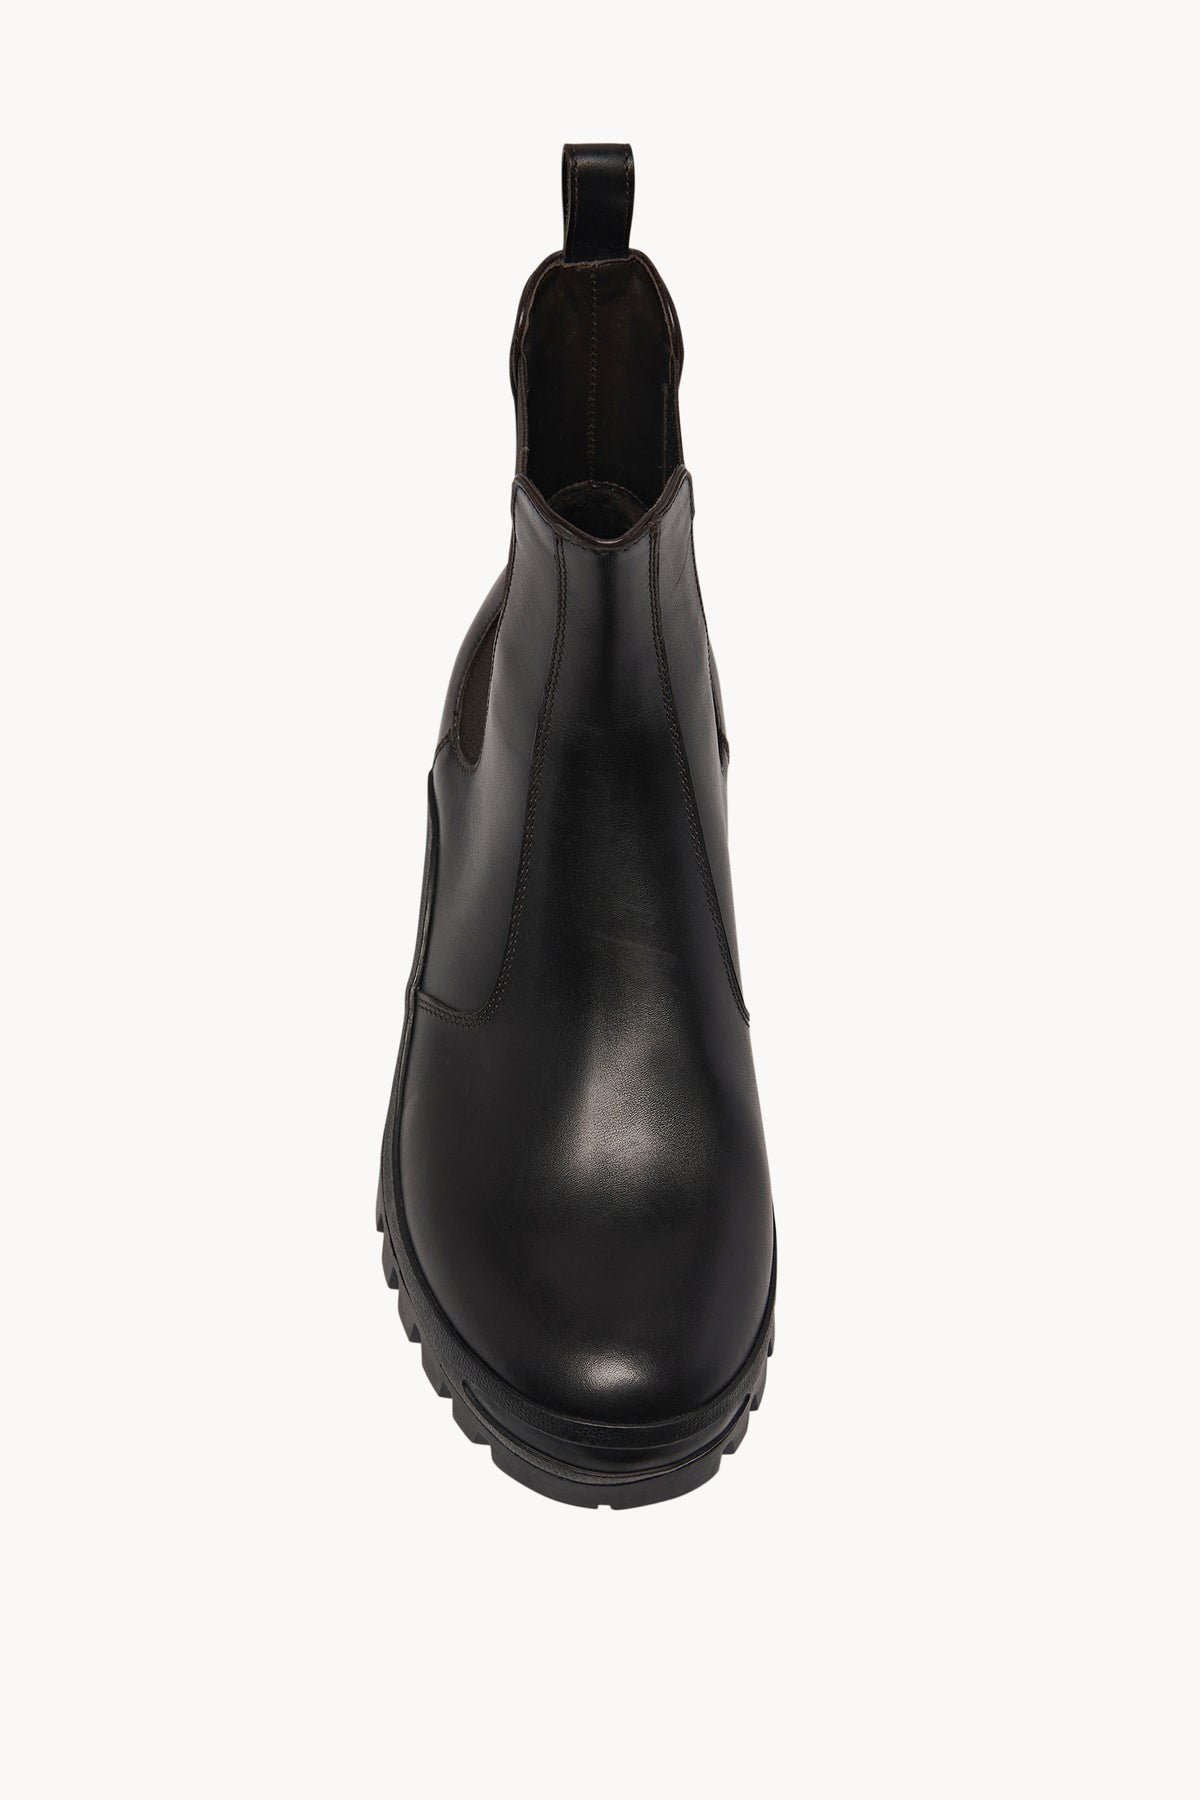 Greta Winter Boot in Leather